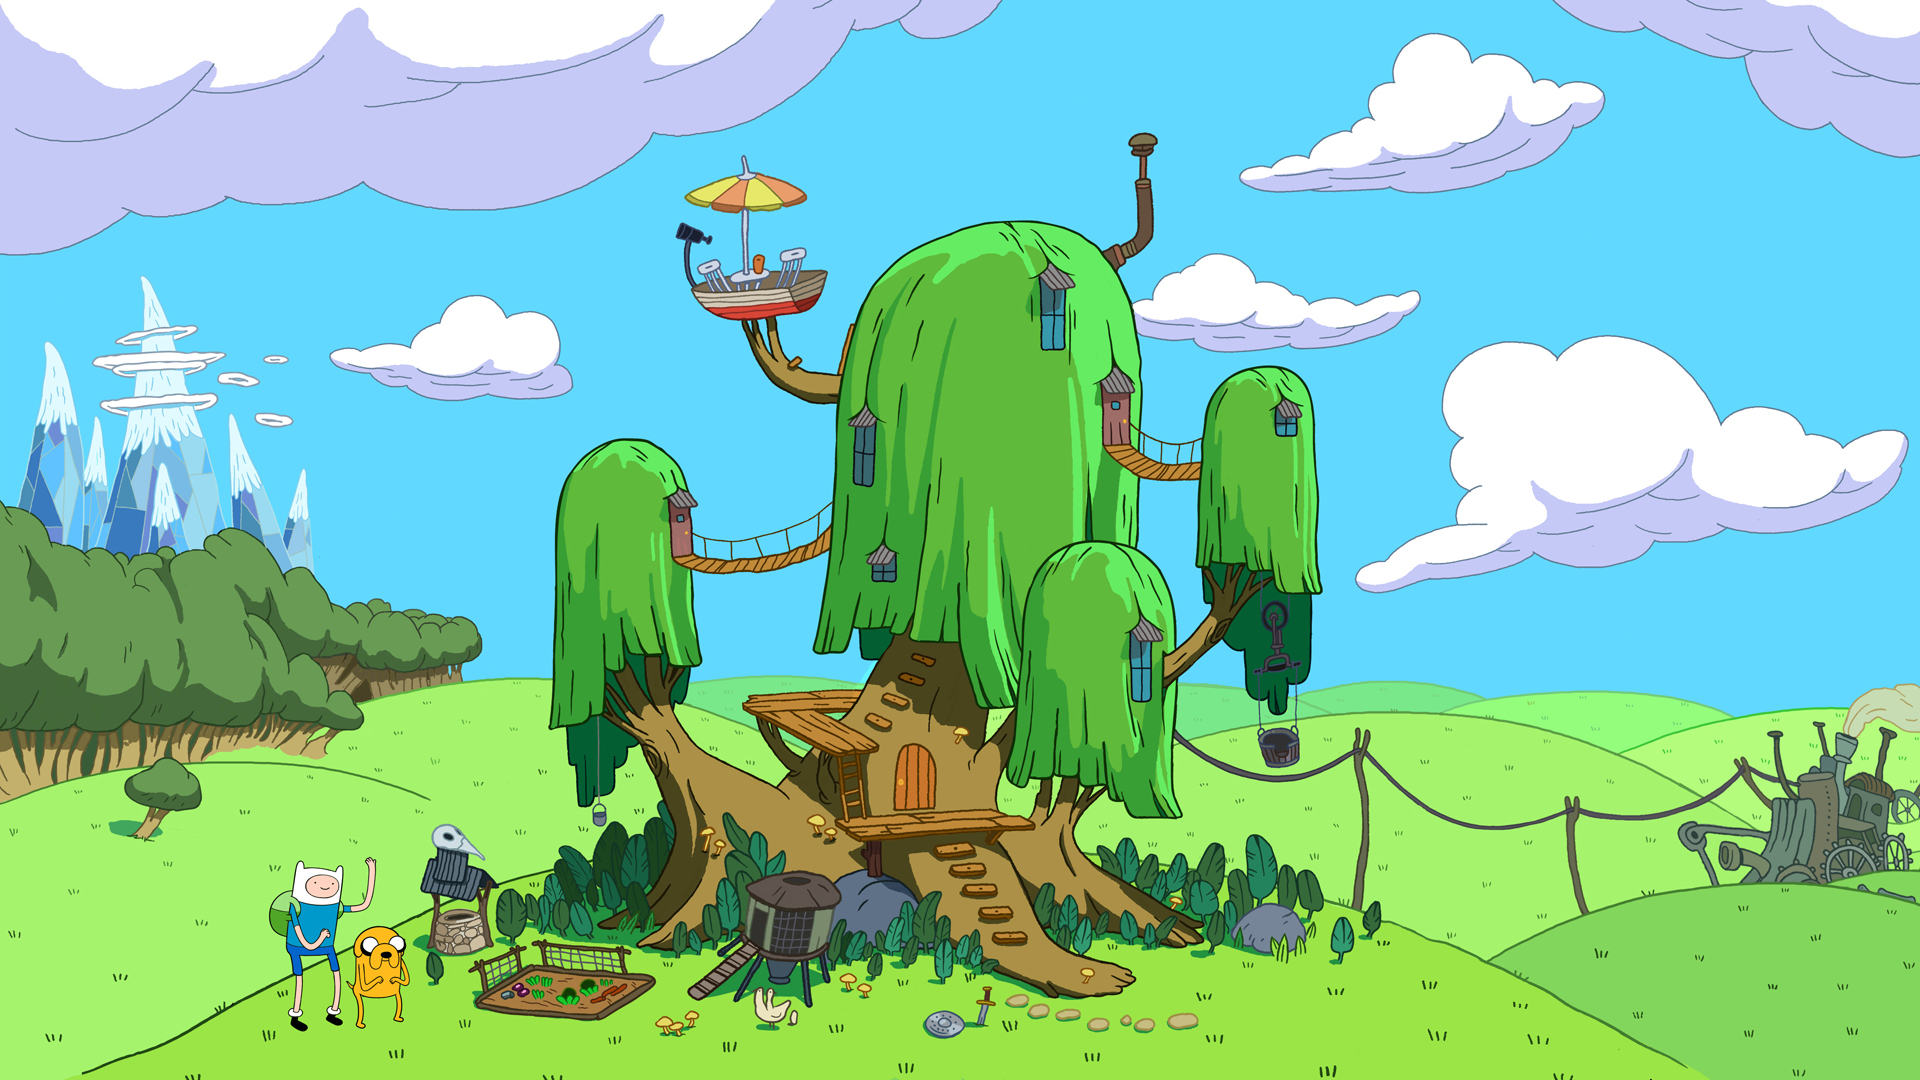 Adventure Time wallpapers download free | PixelsTalk.Net